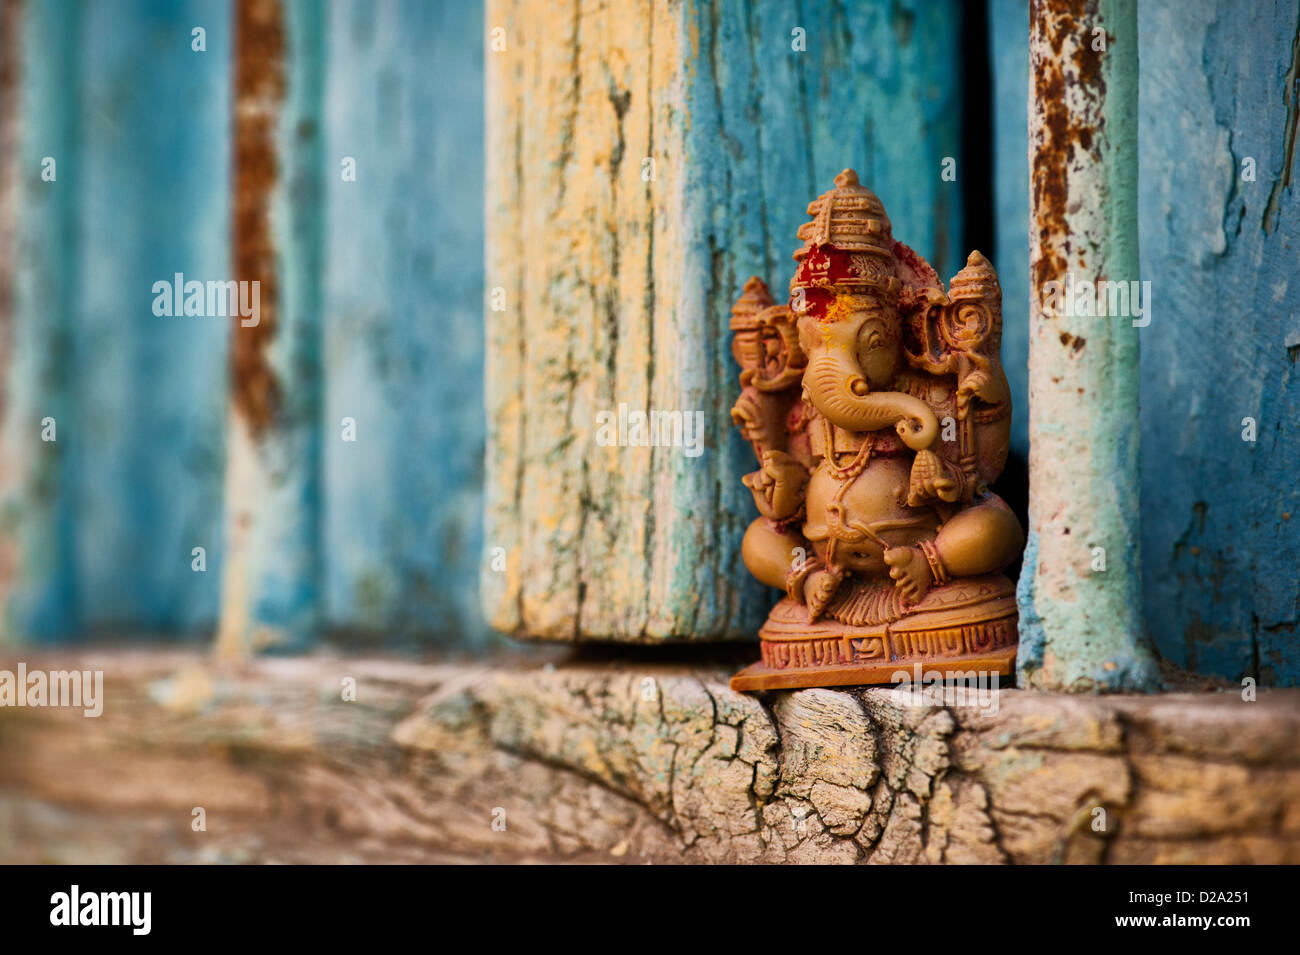 Hindu Elephant God. Lord Ganesha statue in and Indian house window Stock Photo